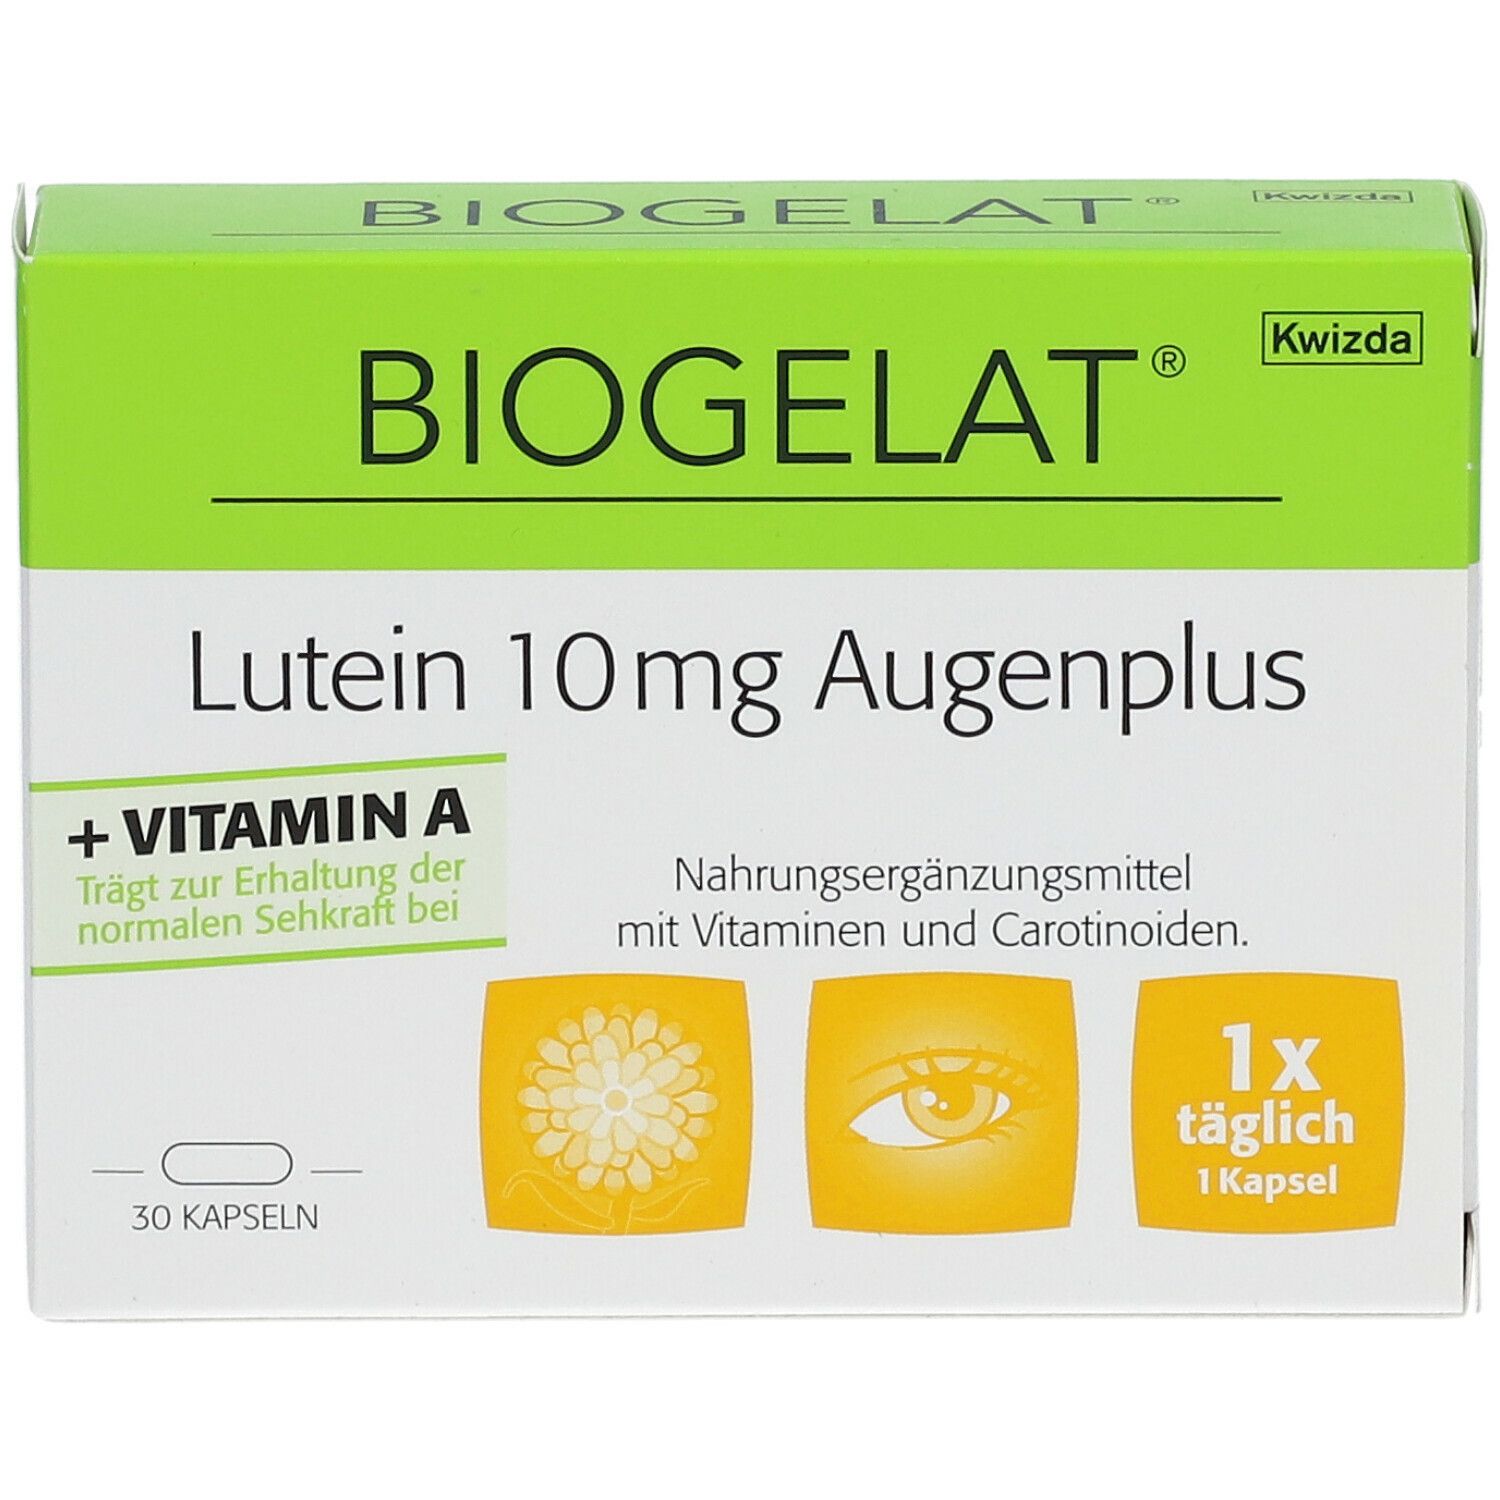 BIOGELAT® Lutein 10mg Augenplus